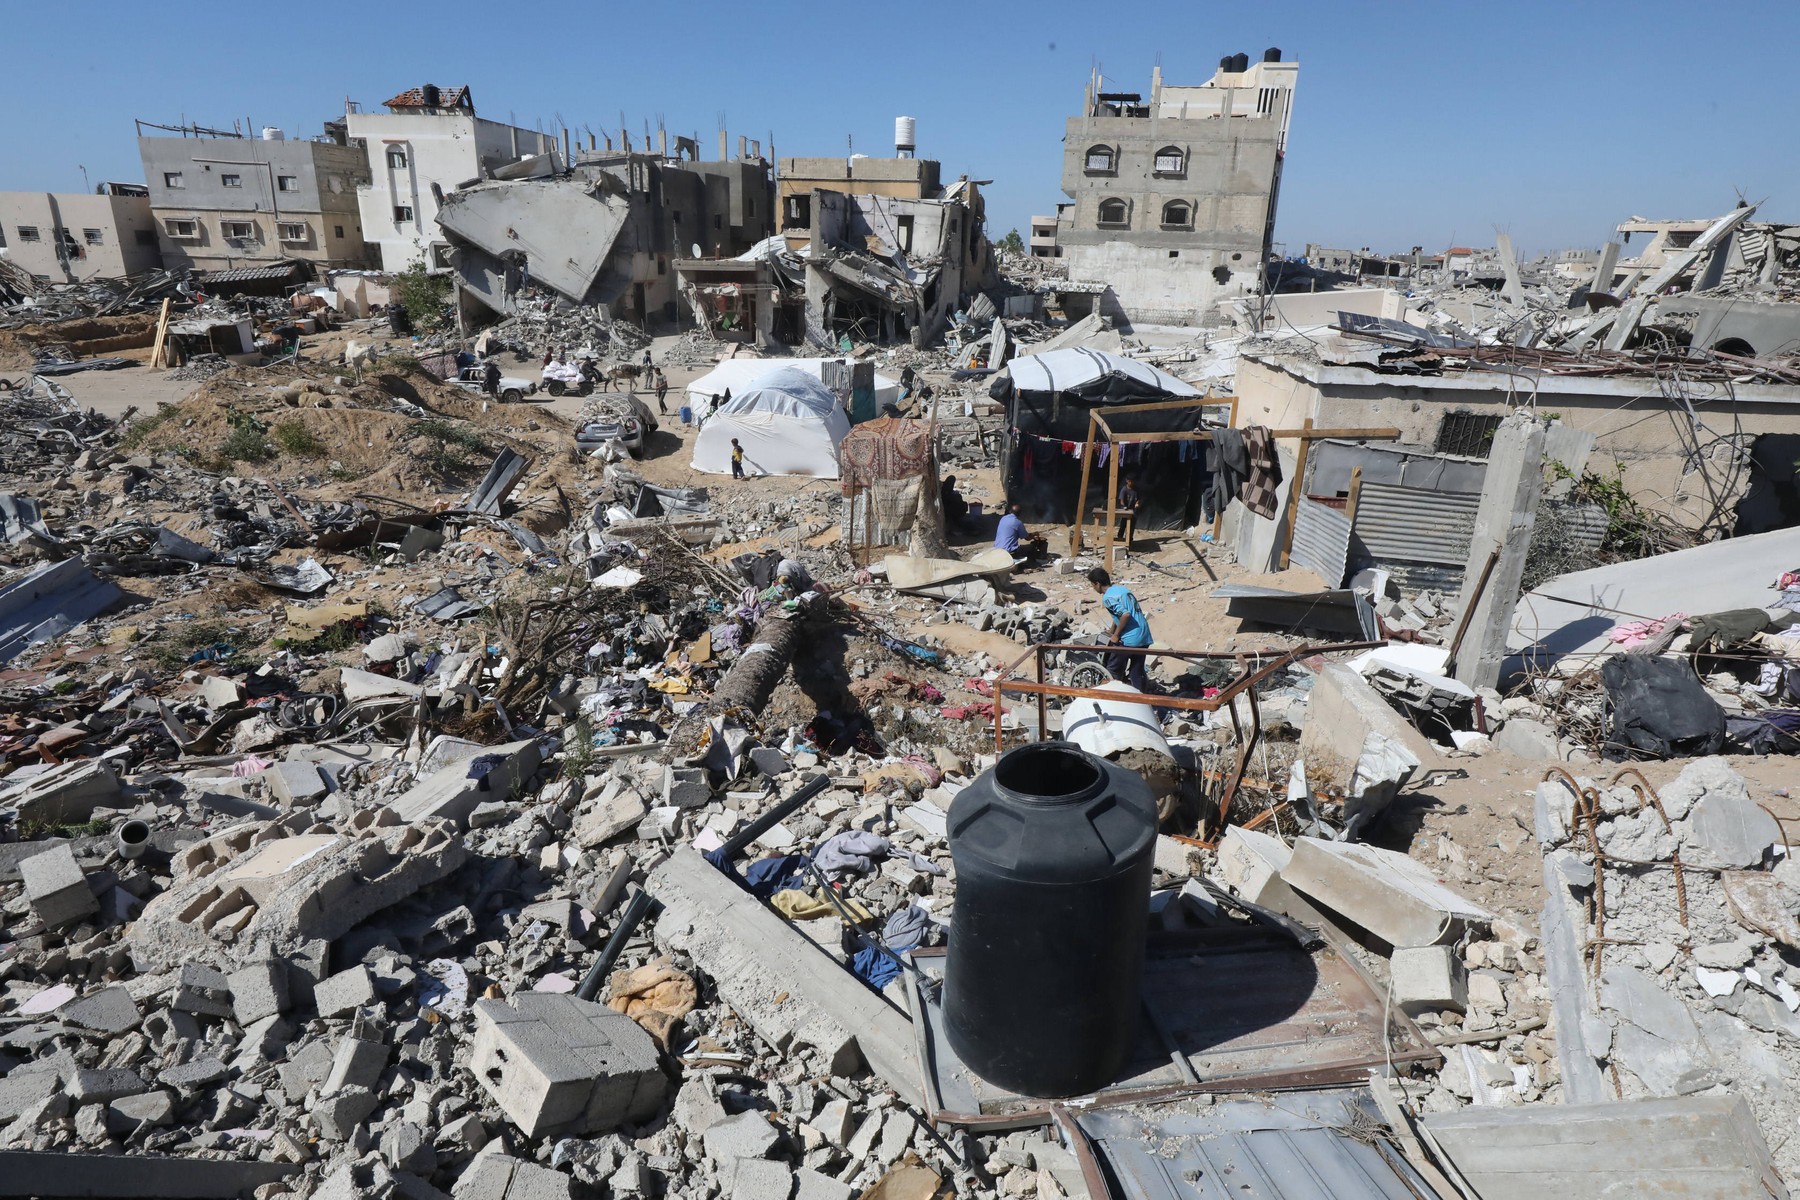 Rafah u ruševinama